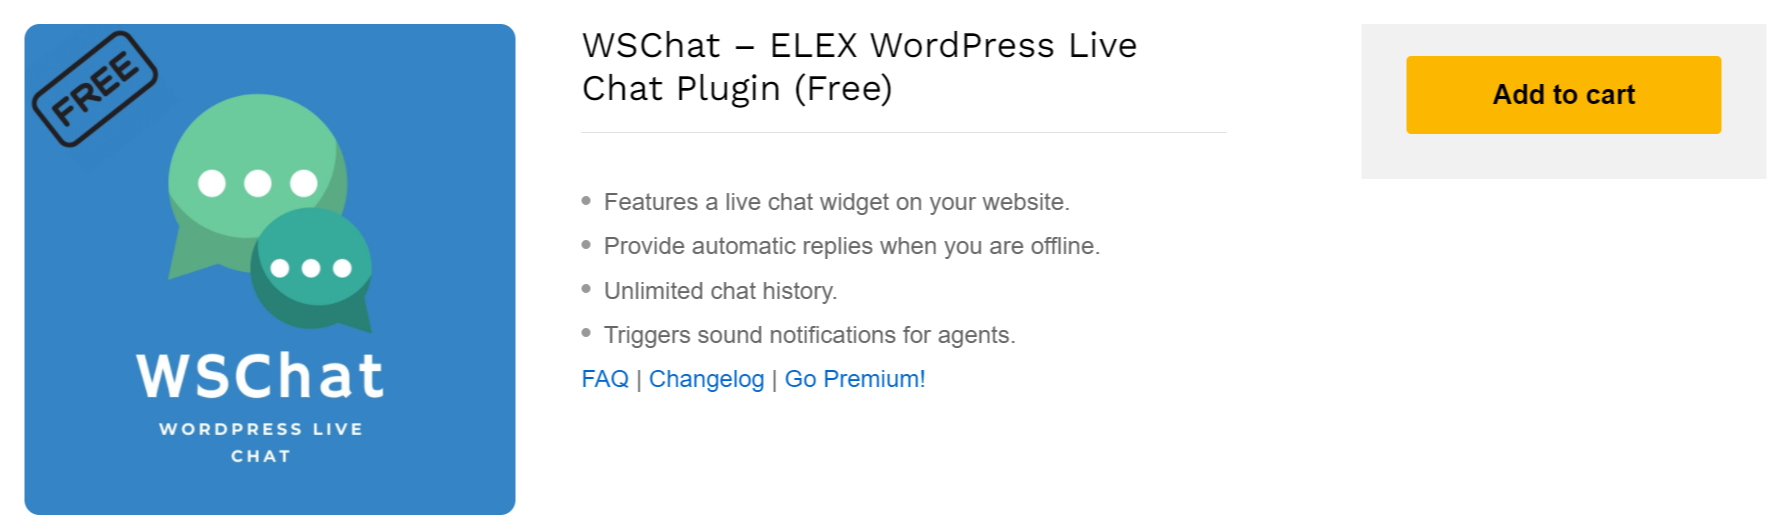 WSChat - the ELEX WordPress Live Chat Plugin